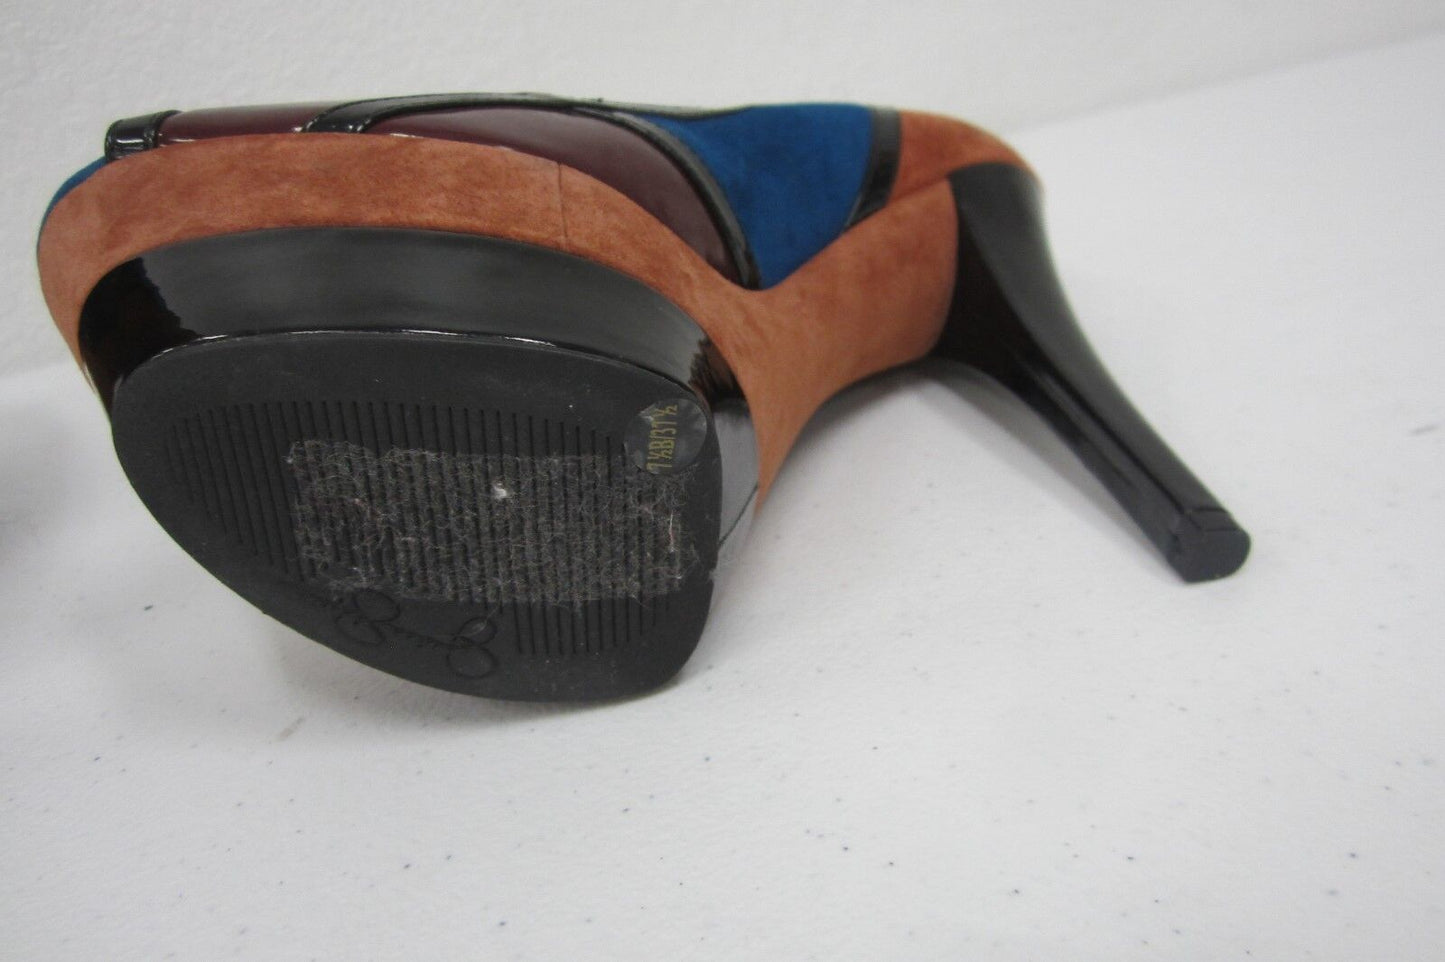 *MINT* Jessica Simpson SEXY EXOTIC Platform Suede & Patent Leather Stilettos 7.5